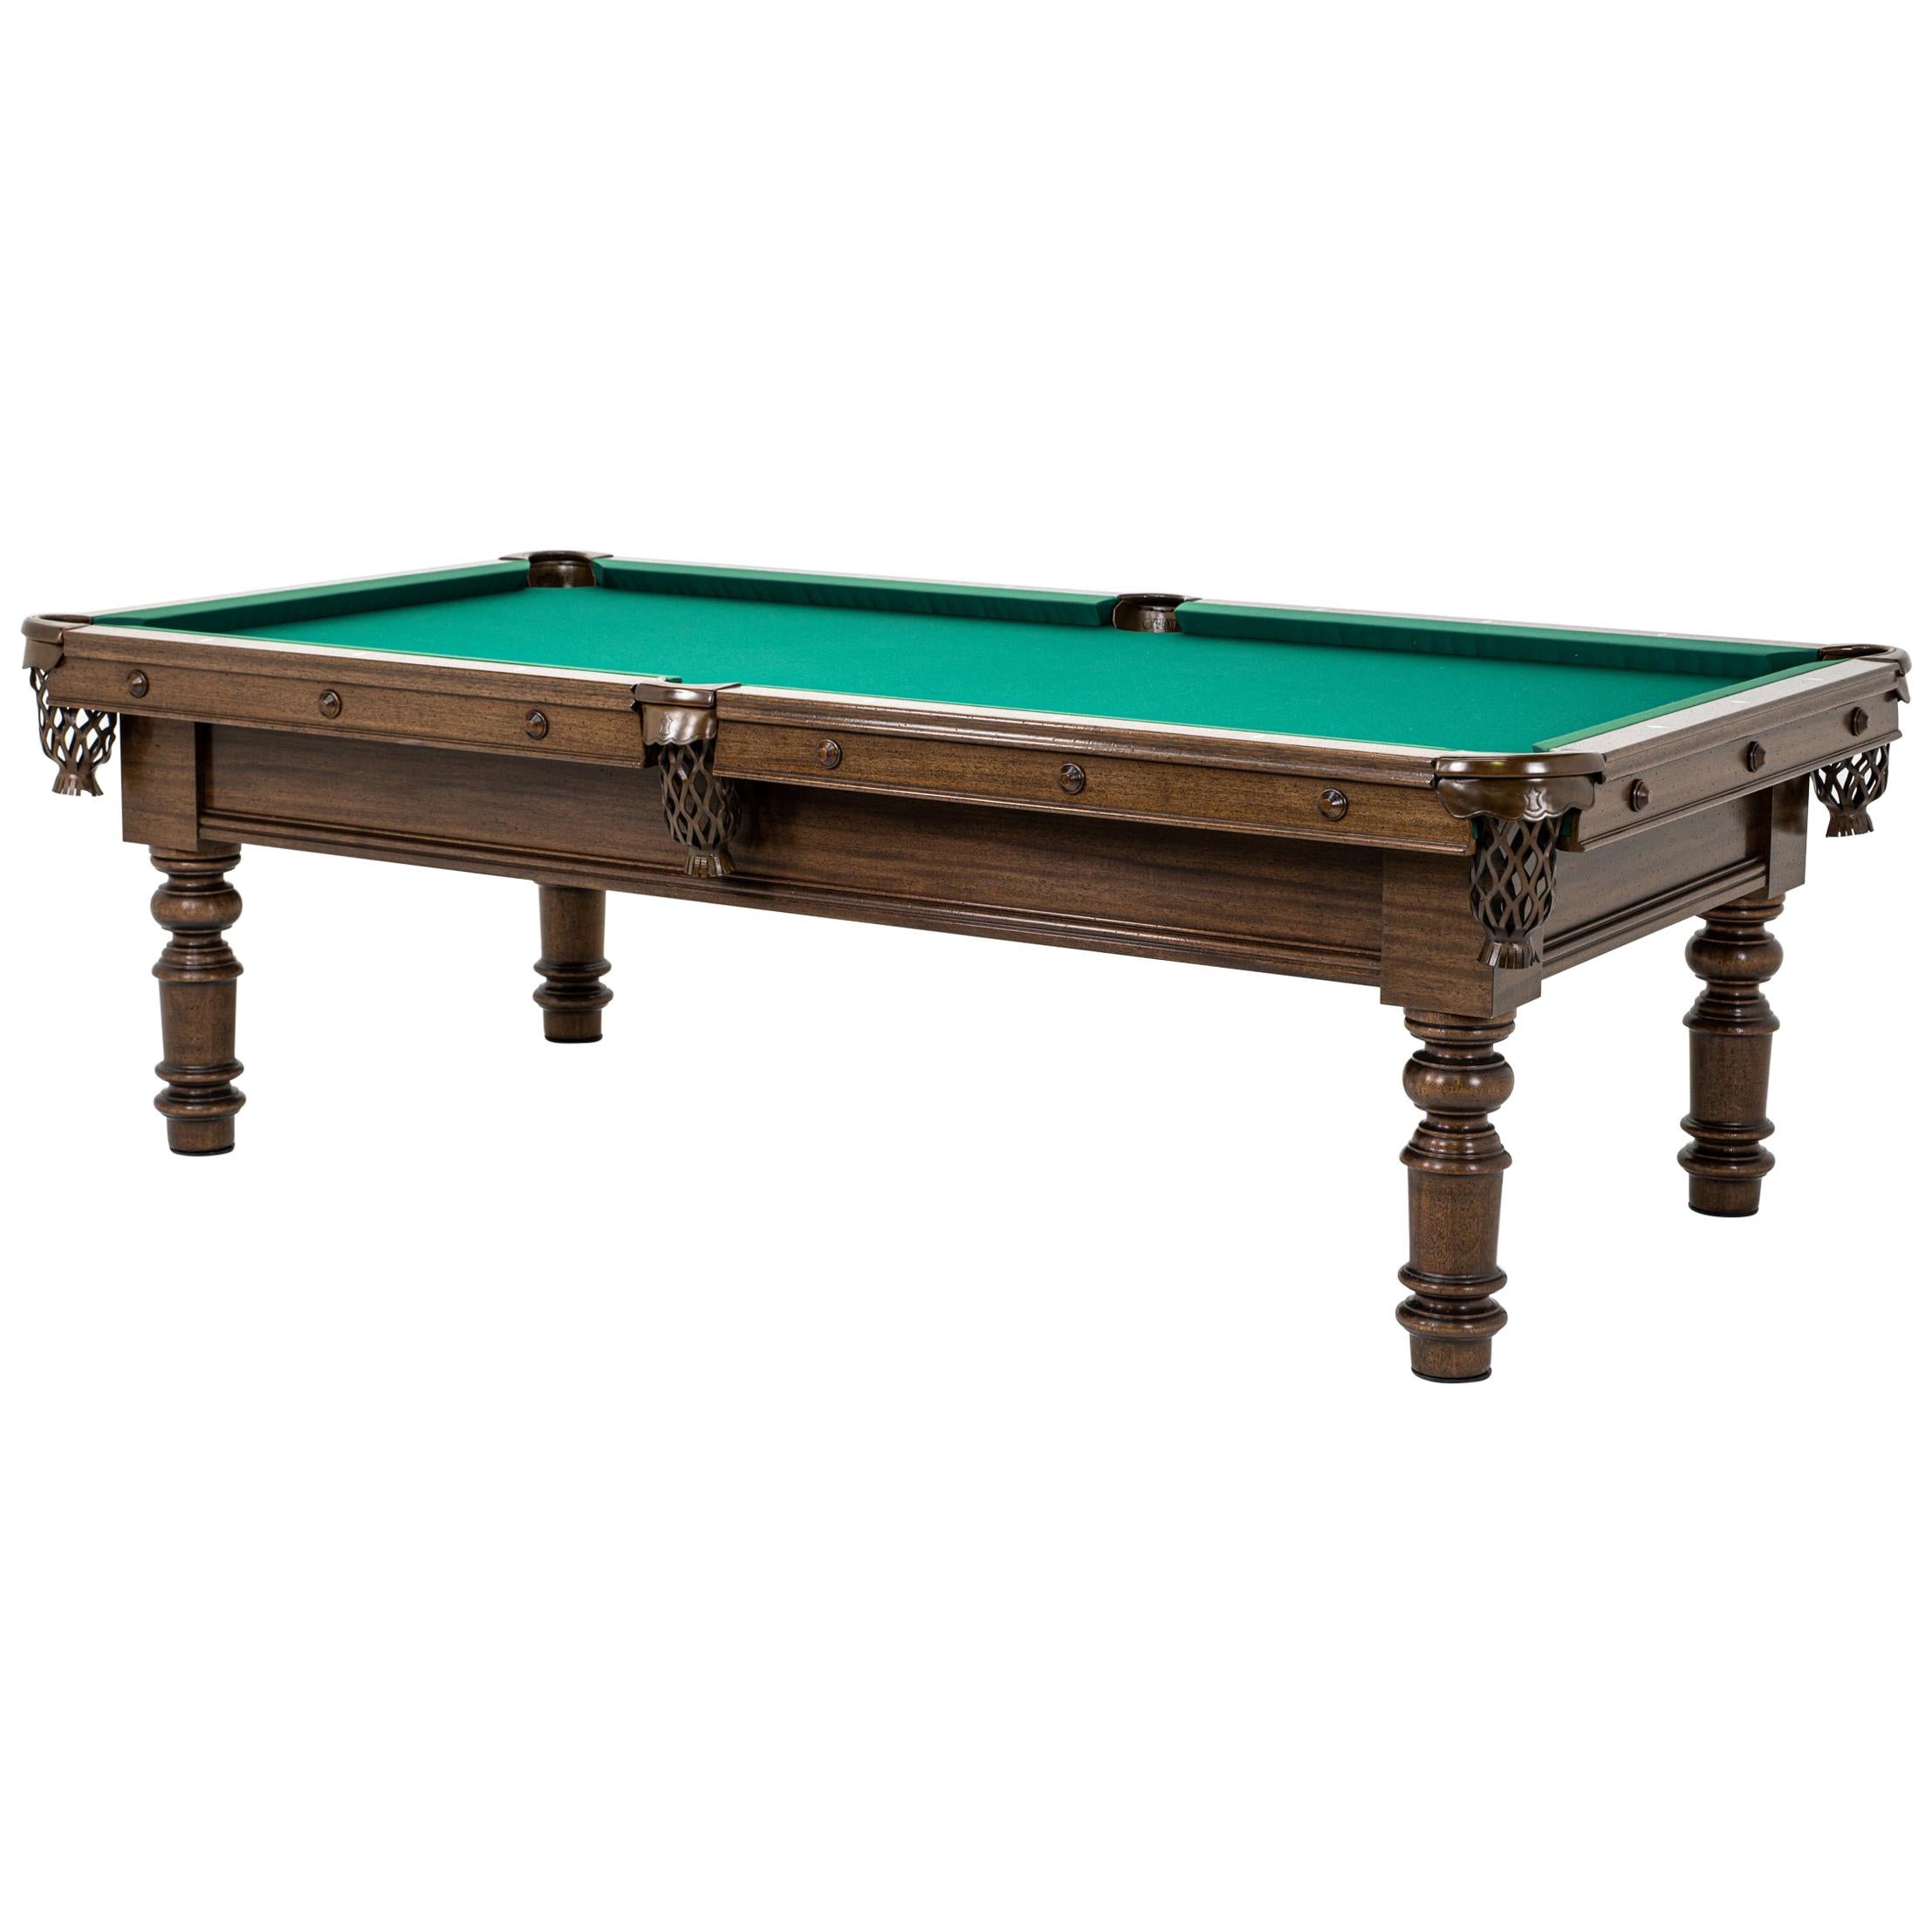 Blatt Billiards Oxford Pool Table For Sale